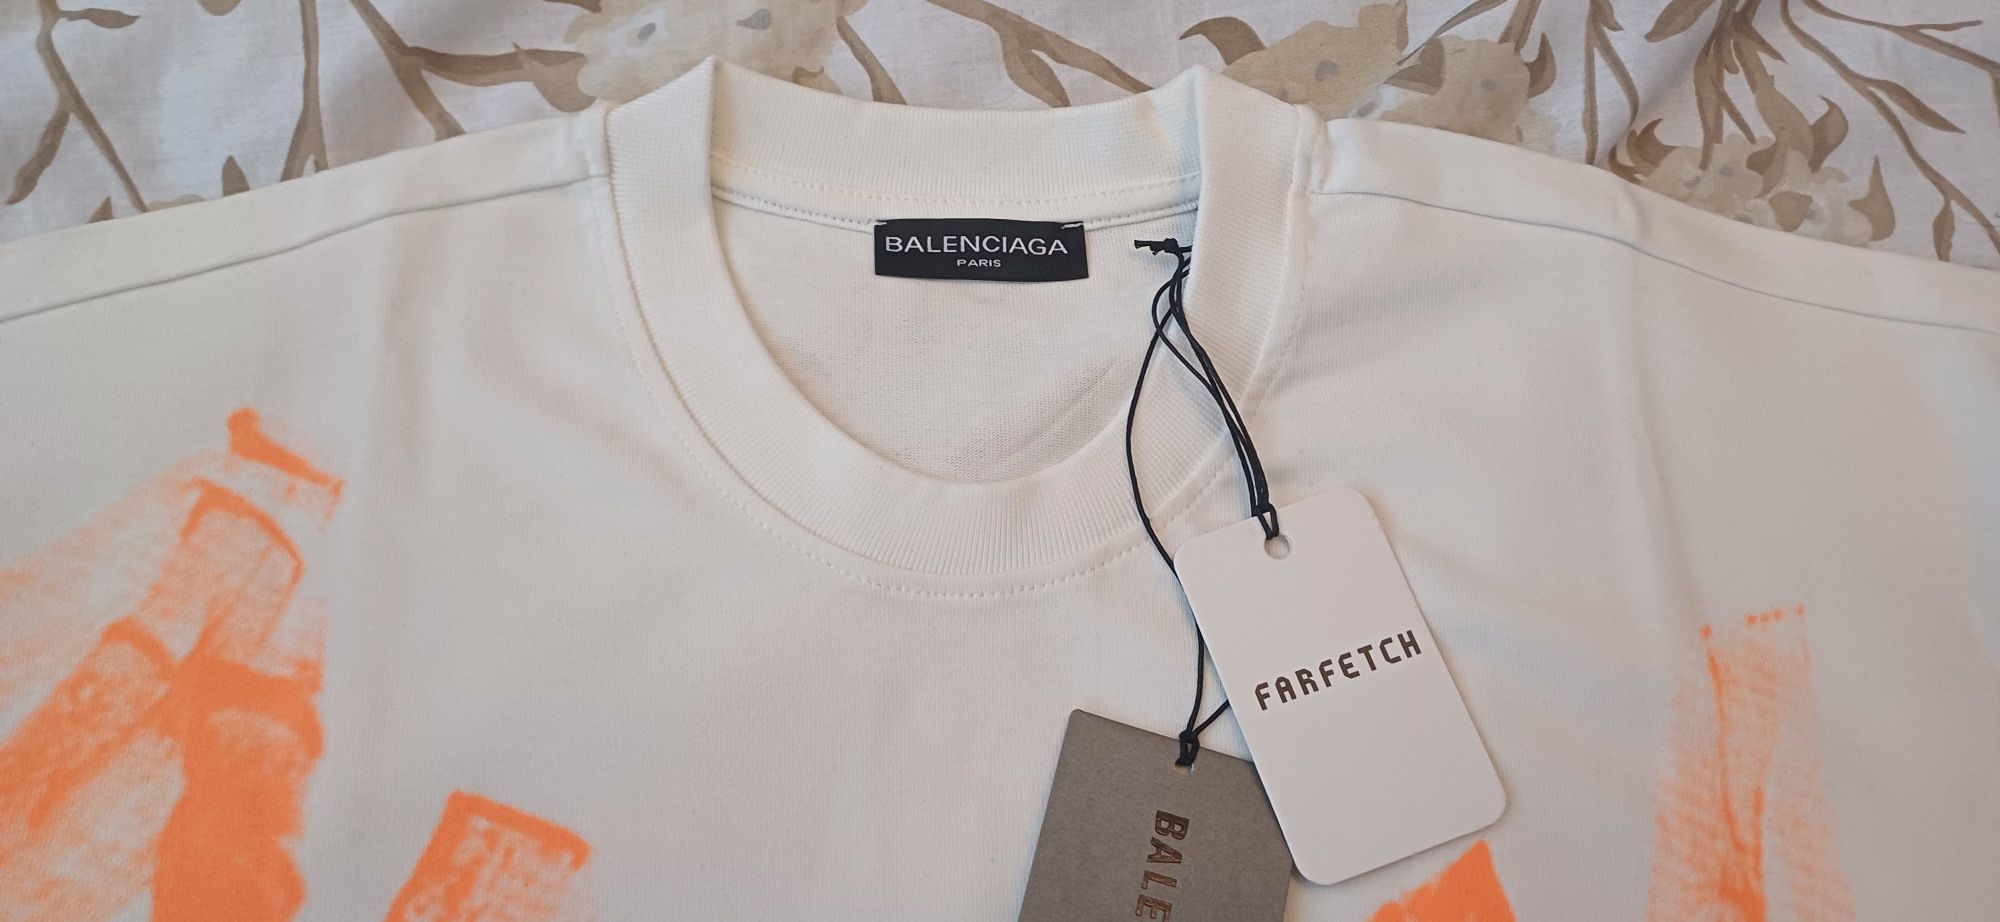 Balenciaga T-shirt oversize s,m,L,xl,xxl